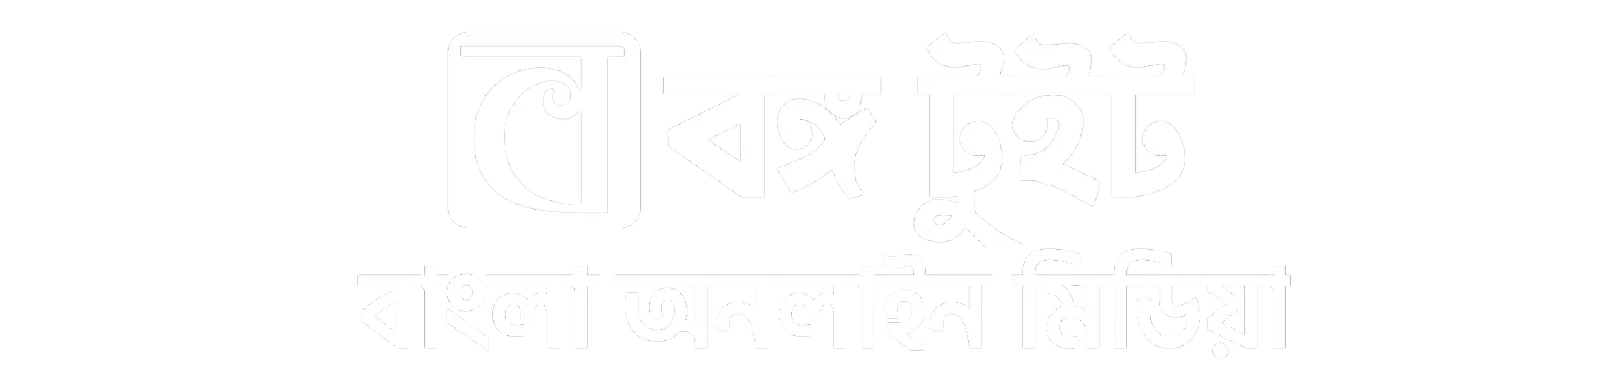 BONGO TWEET - Bangla Online Media